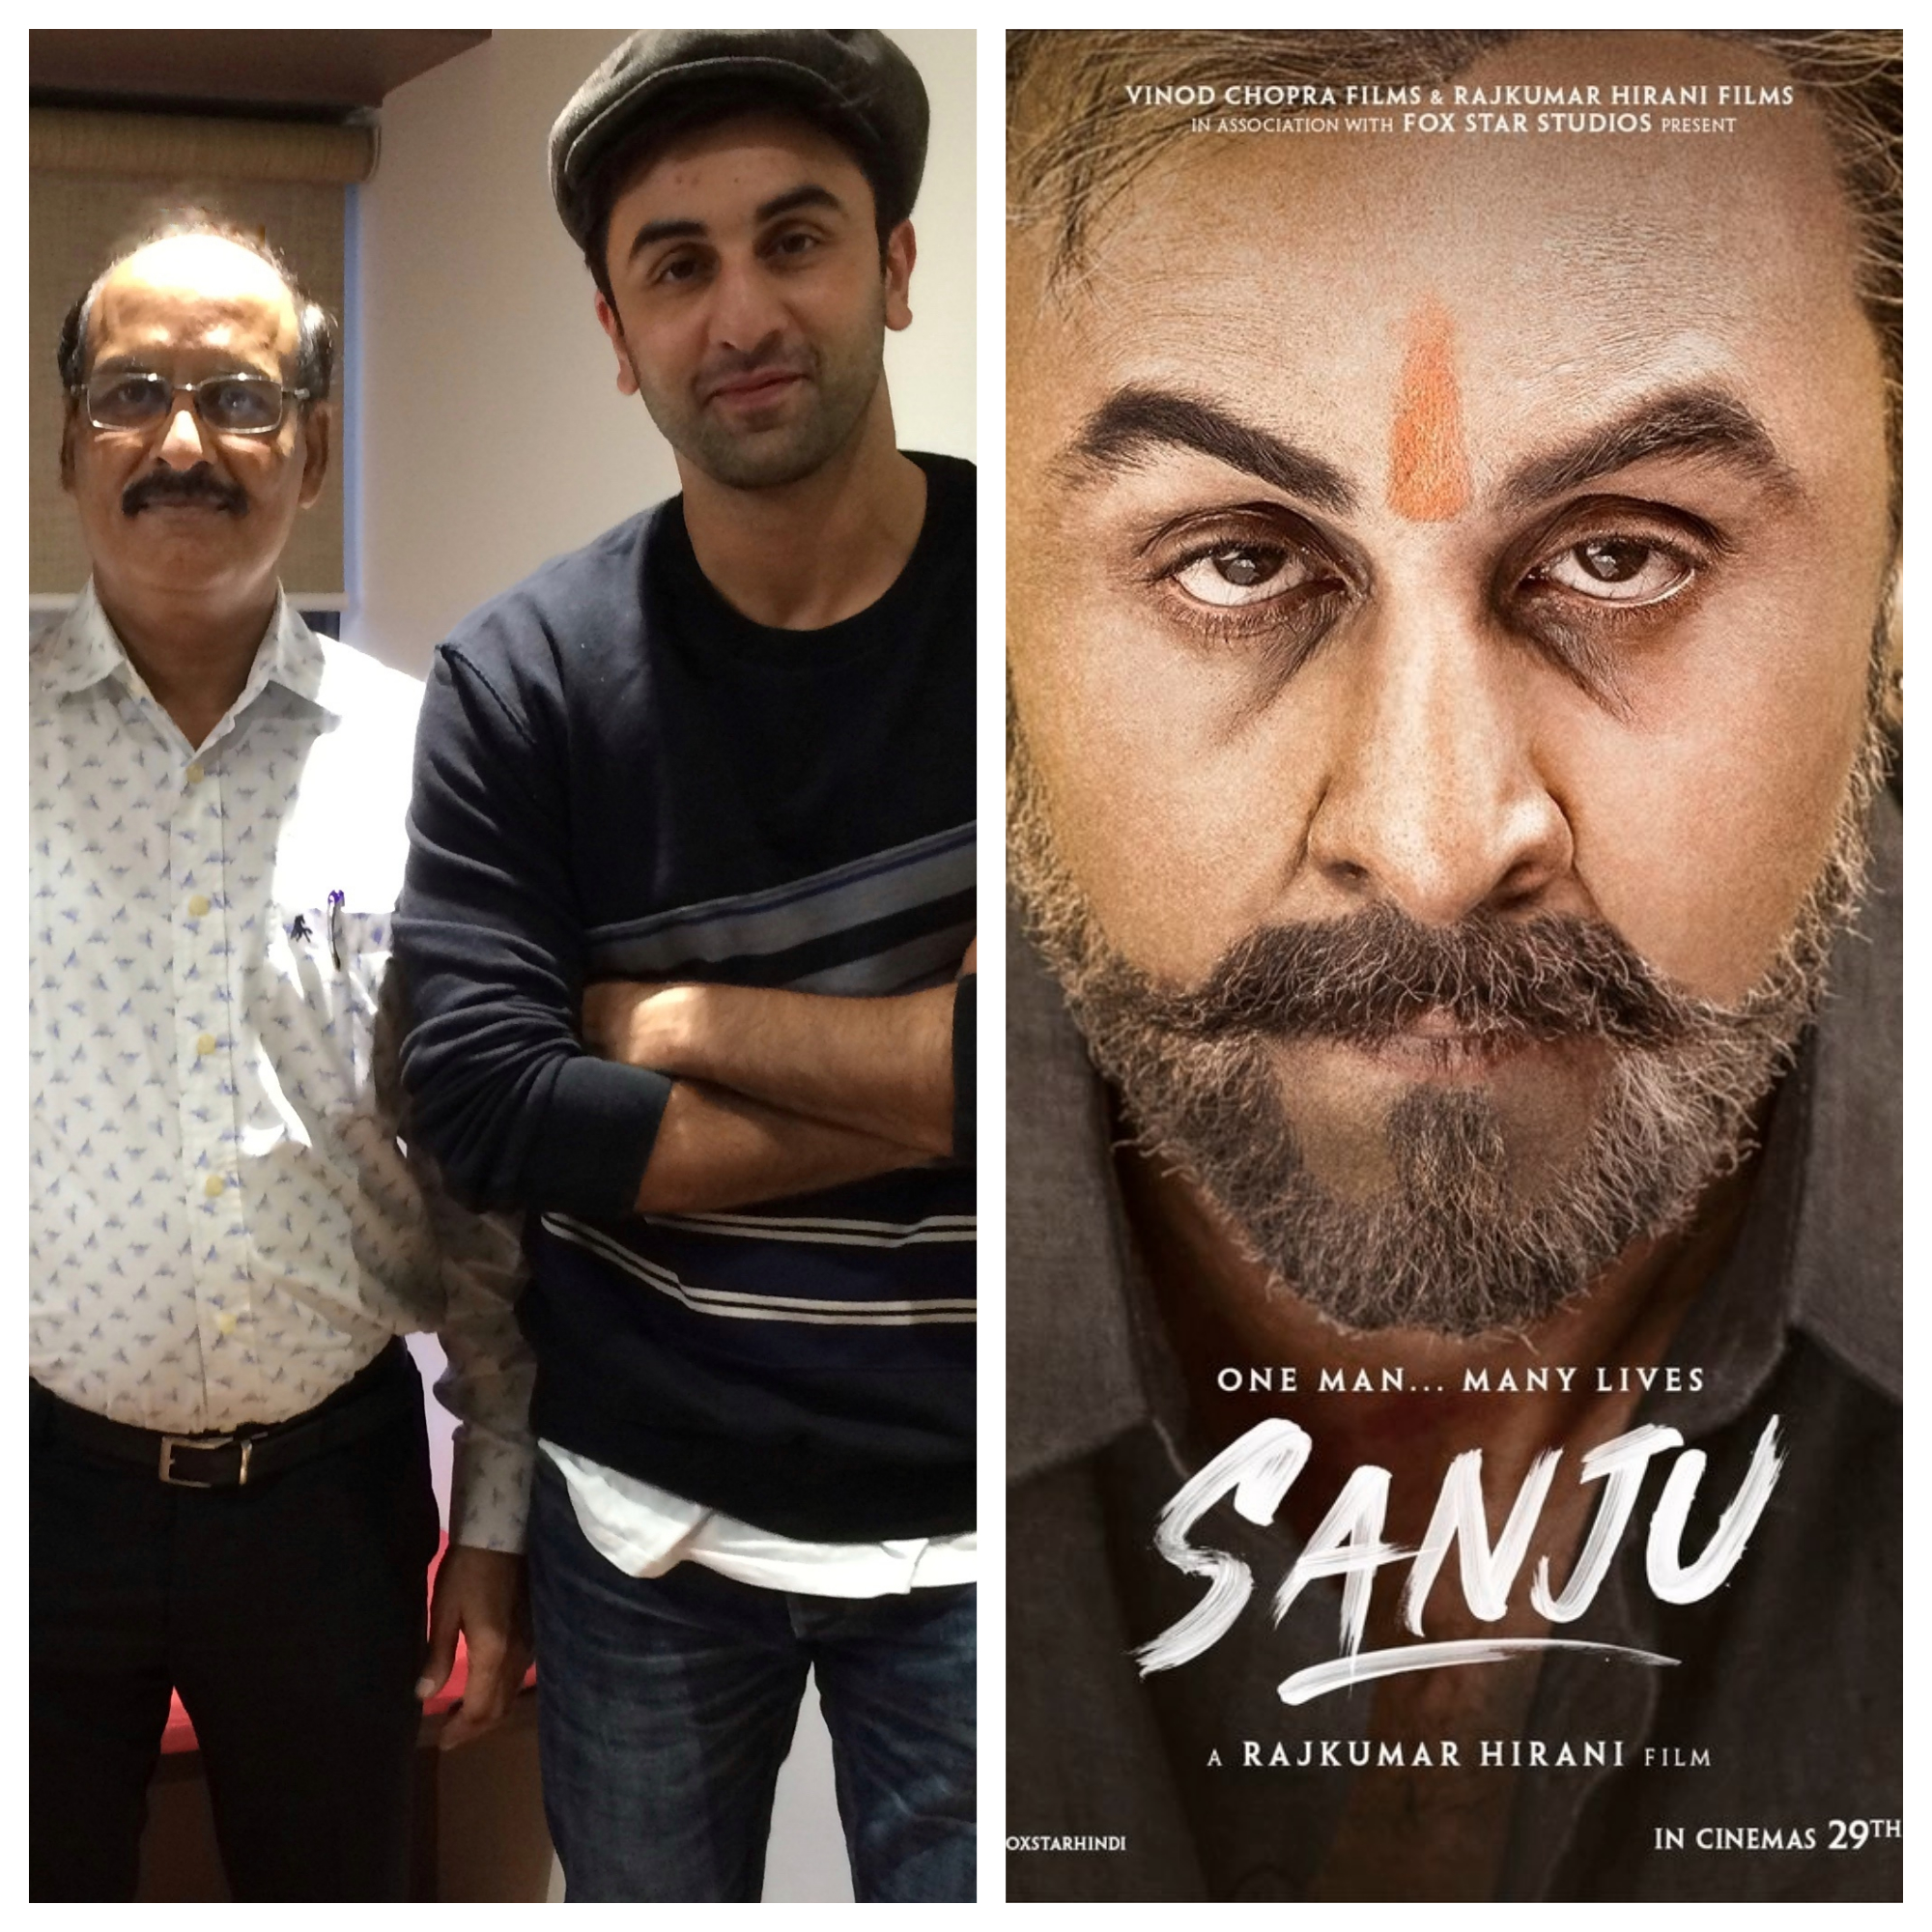 EXCLUSIVE: Loved Ranbir Kapoor's look in Sanju? Meet the man who did his prosthetics - Dr. Suresh Murkey